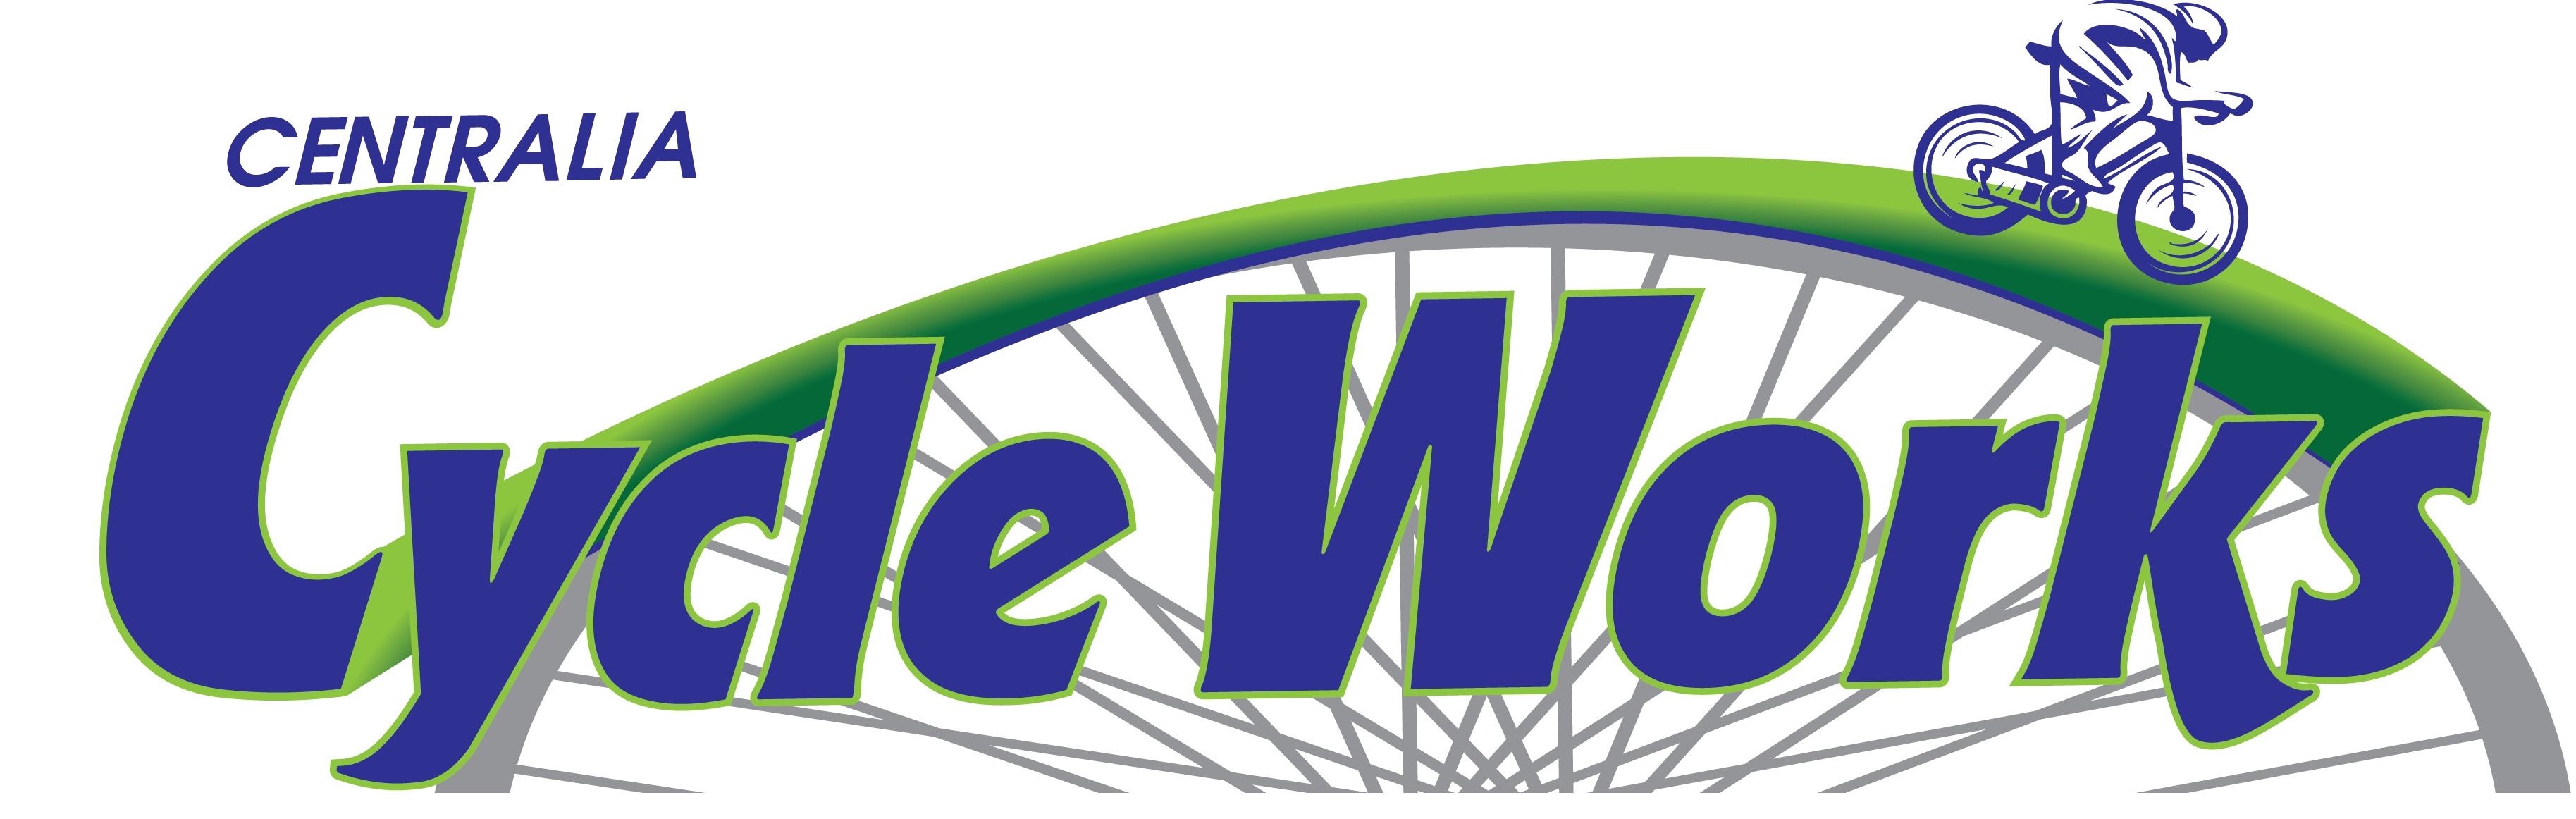 Centralia Cycle Works Logo